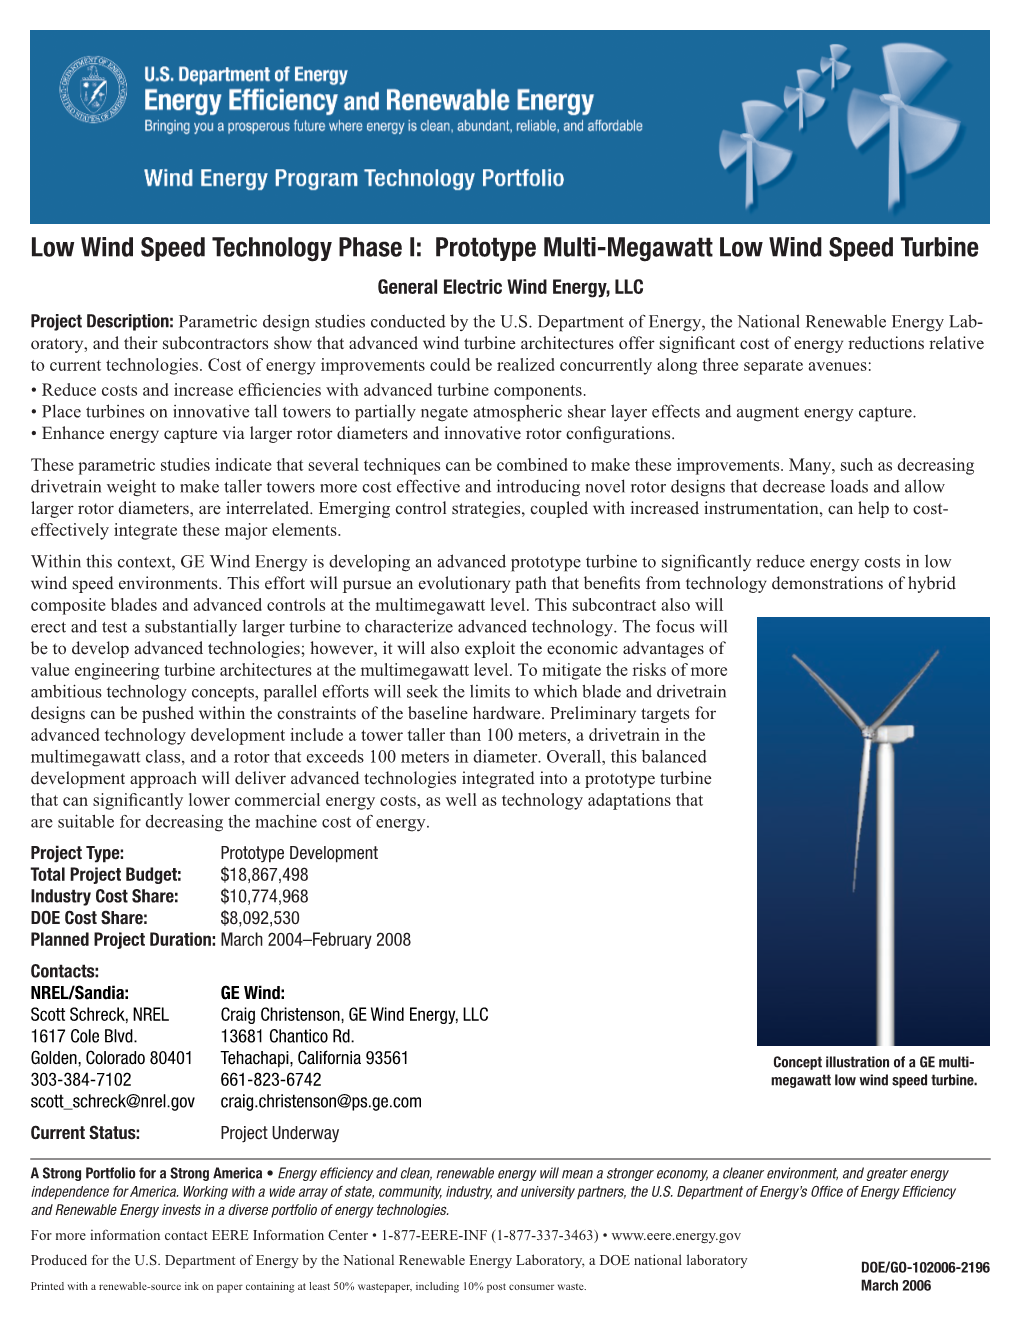 Prototype Multi-Megawatt Low Wind Speed Turbine General Electric Wind Energy, LLC Project Description: Parametric Design Studies Conducted by the U.S